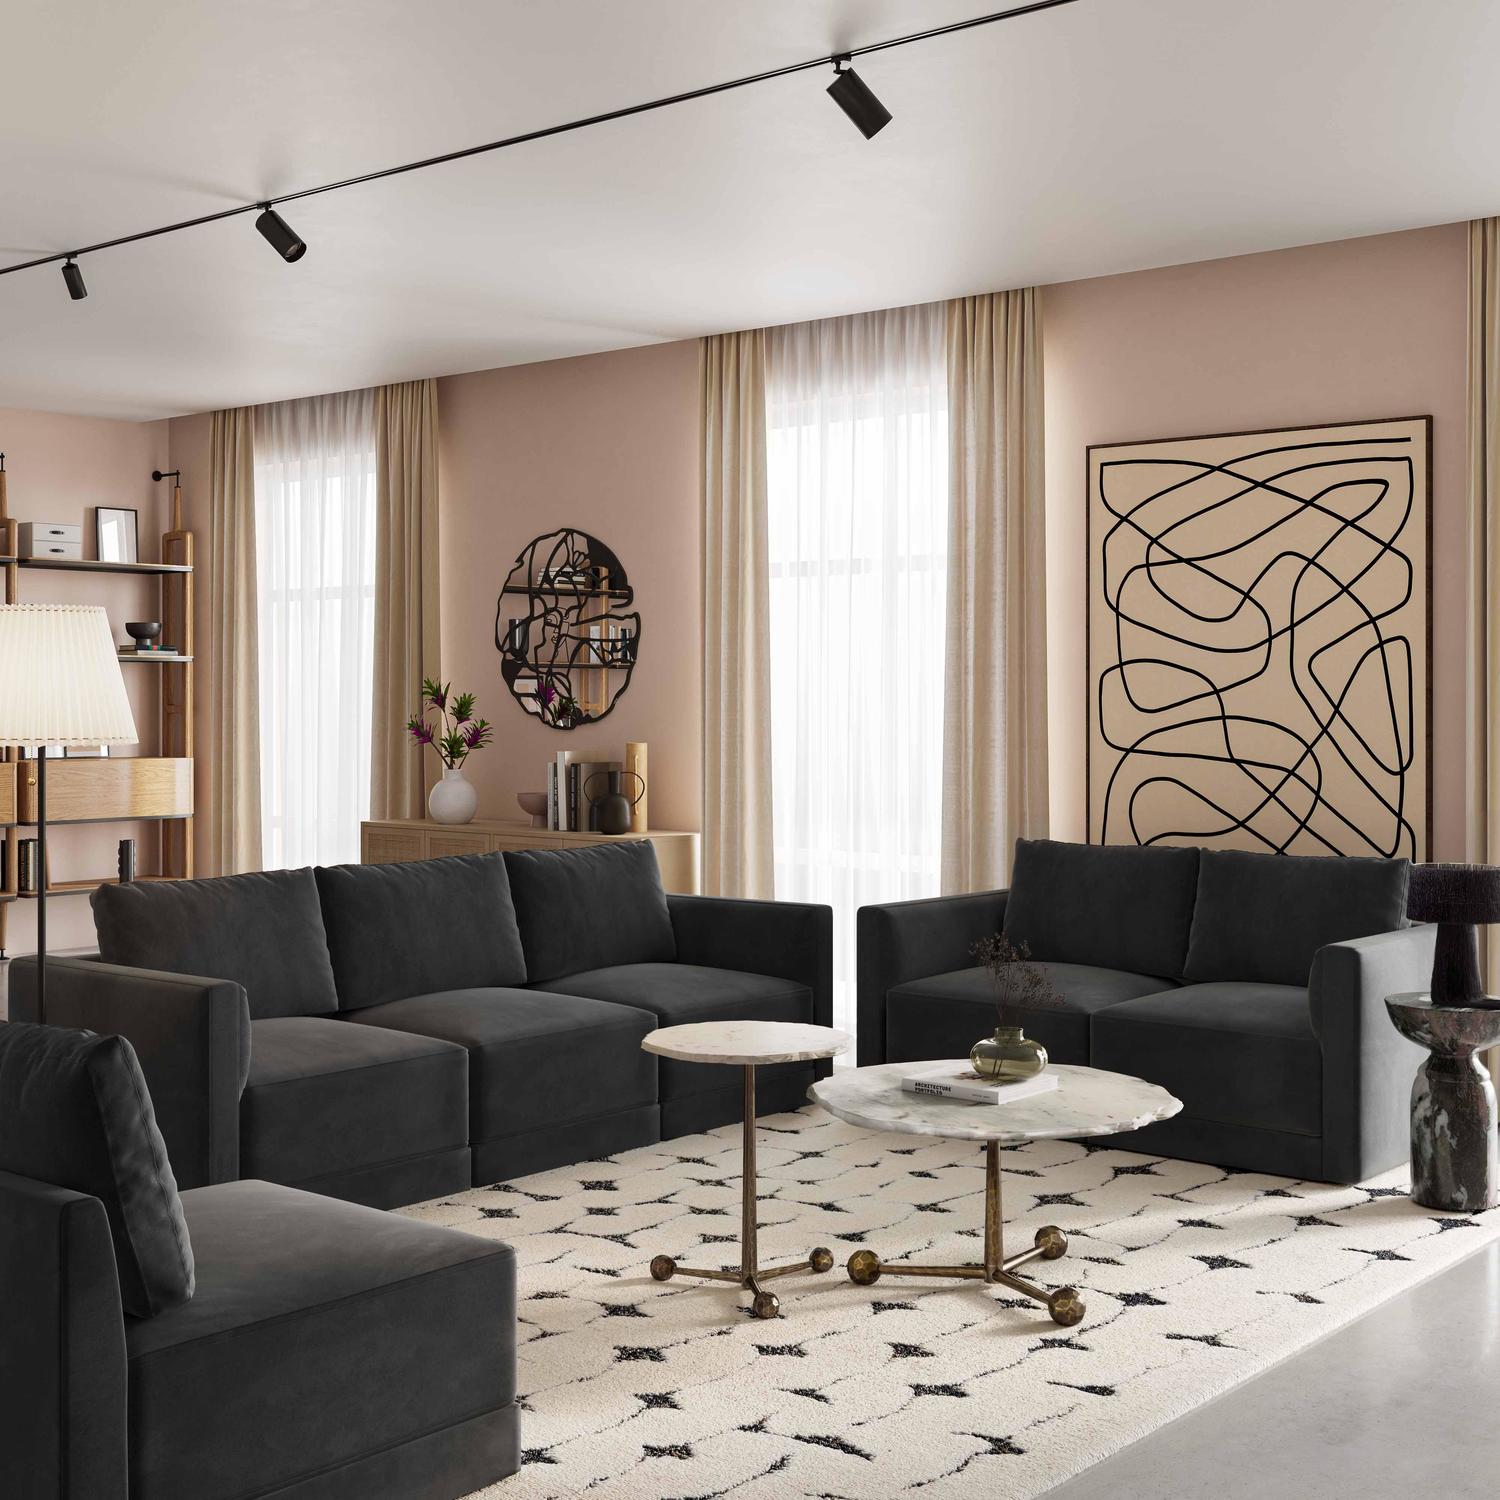 sofa leather Tov Furniture Sofas Charcoal